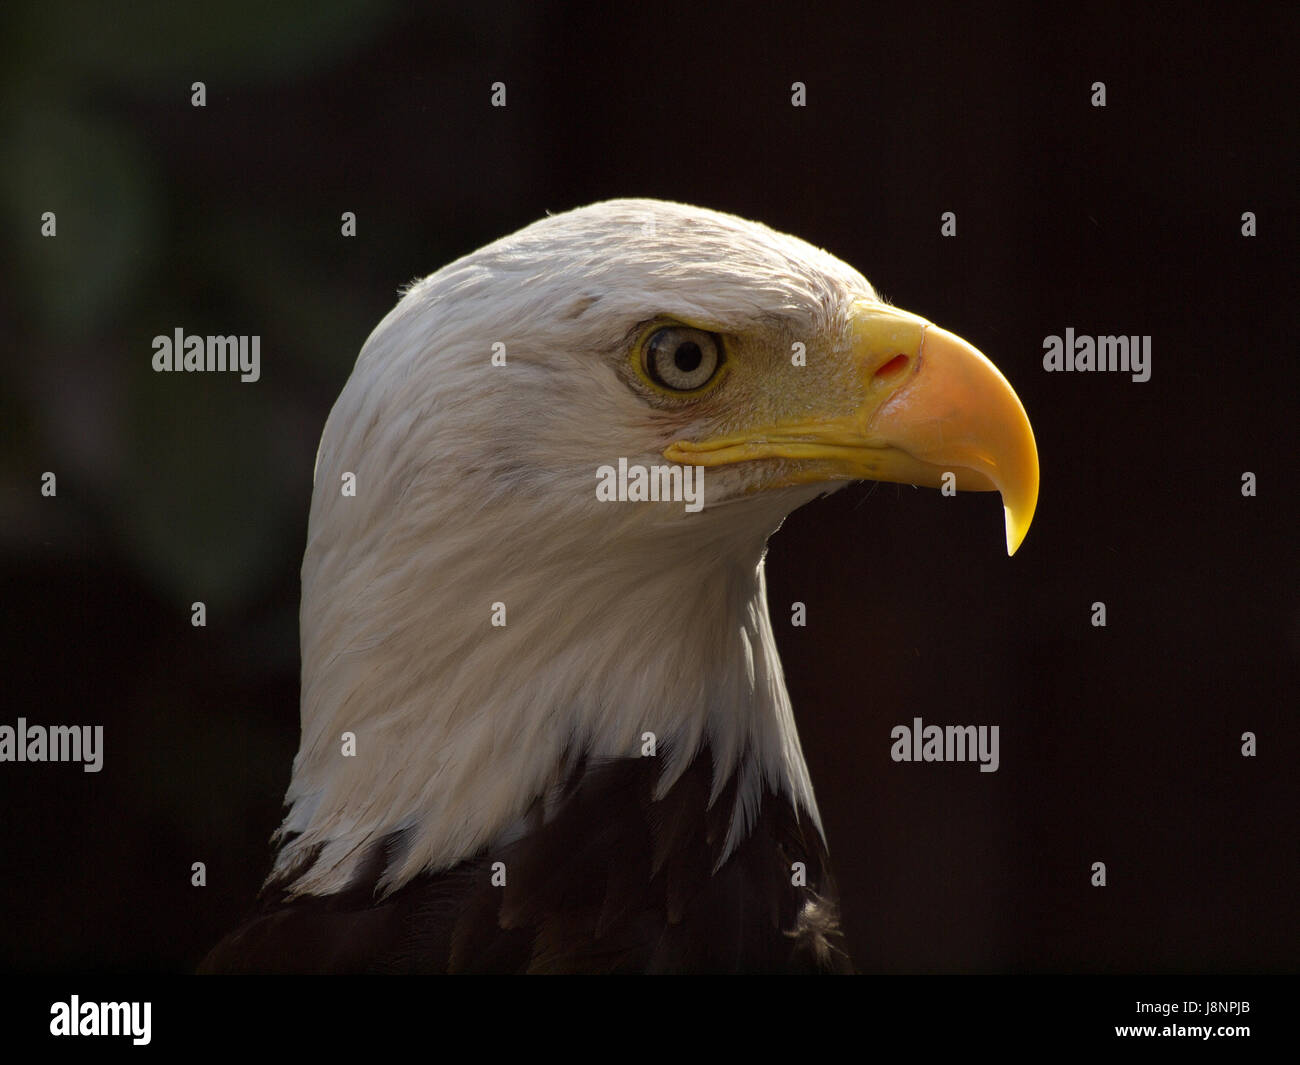 animal, bird, eye, organ, birds, birds of prey, raptor, look, glancing, see, Stock Photo